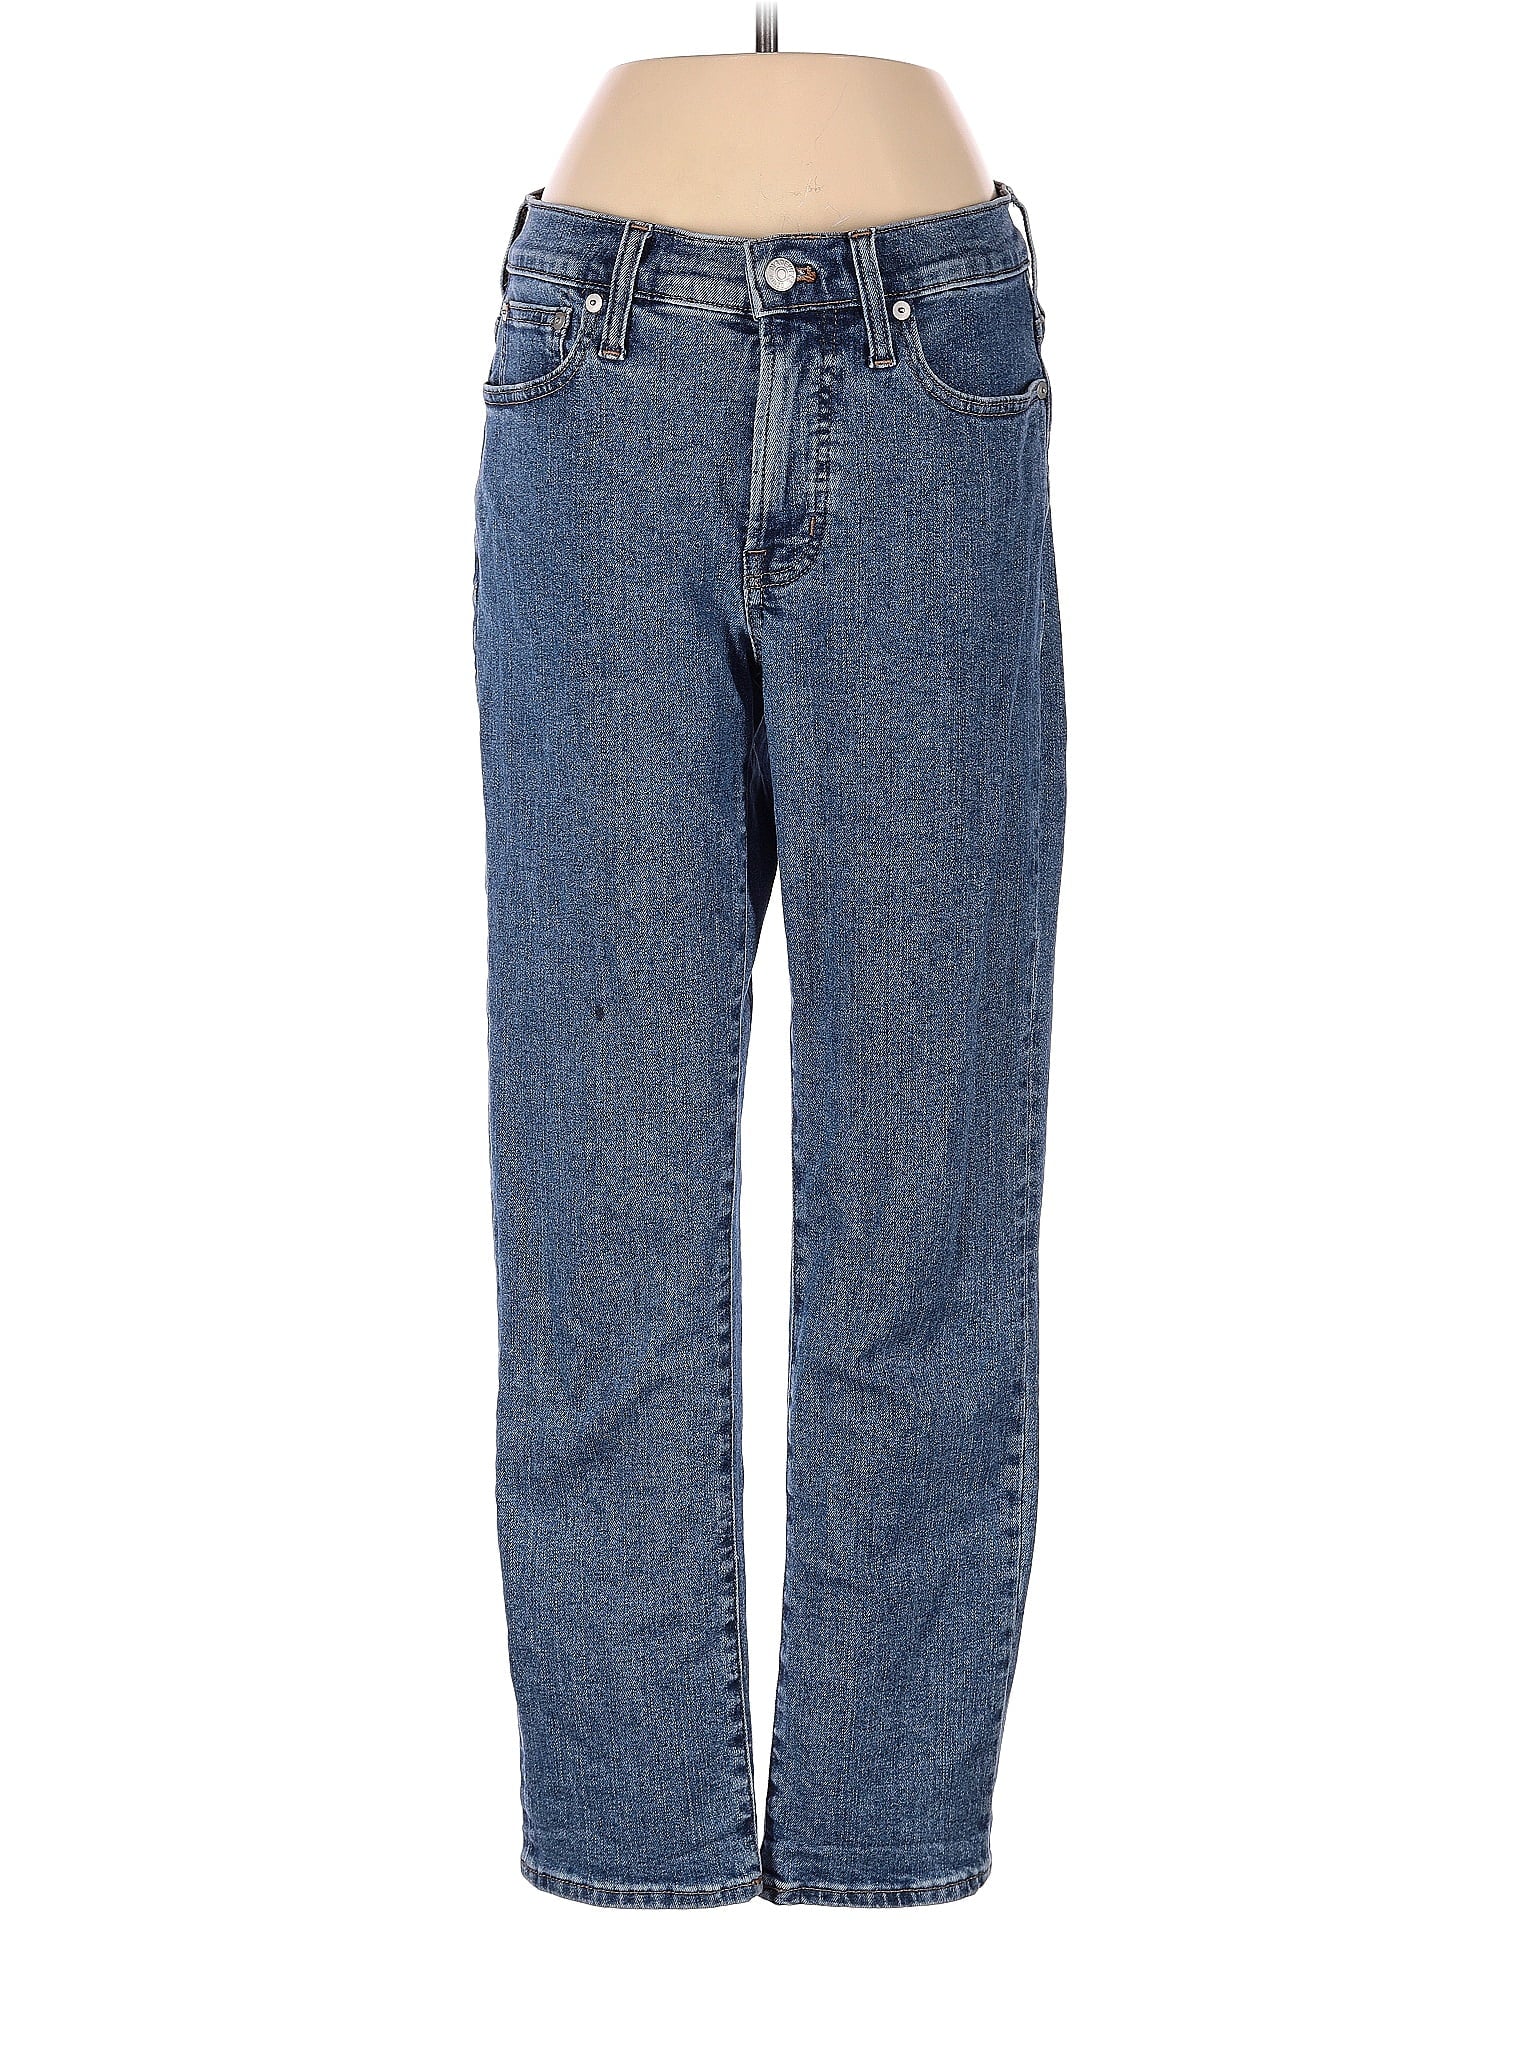 Mid-Rise Boyjeans Jeans in Dark Wash waist size - 24